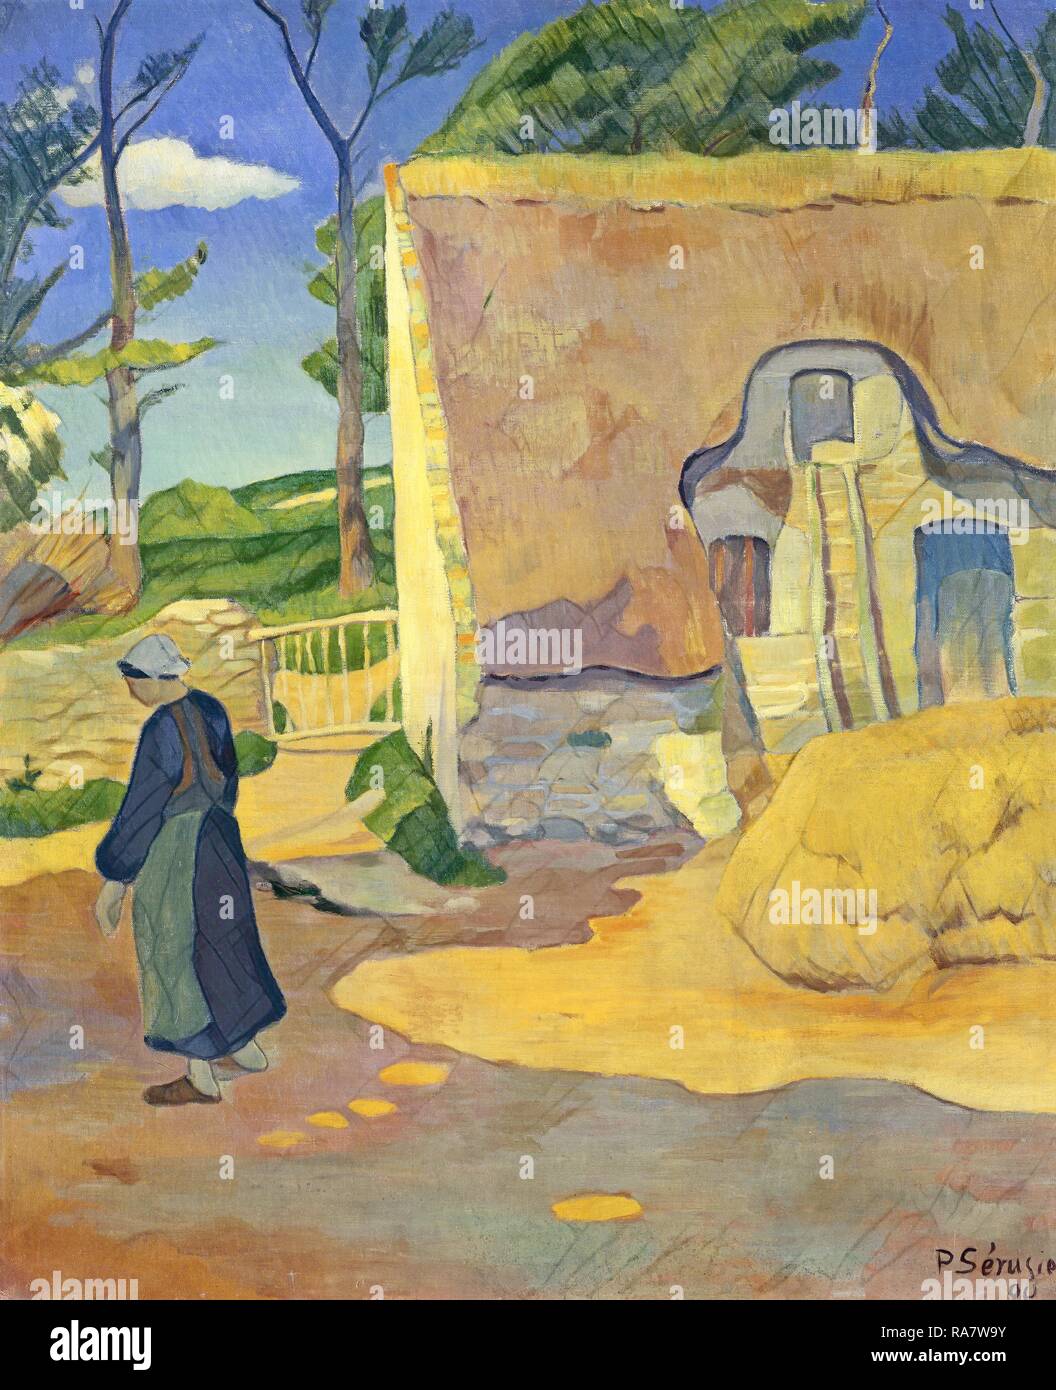 Paul Sérusier (French, 1863 - 1927), Farmhouse at Le Pouldu, 1890, oil on canvas. Reimagined by Gibon. Classic art reimagined Stock Photo